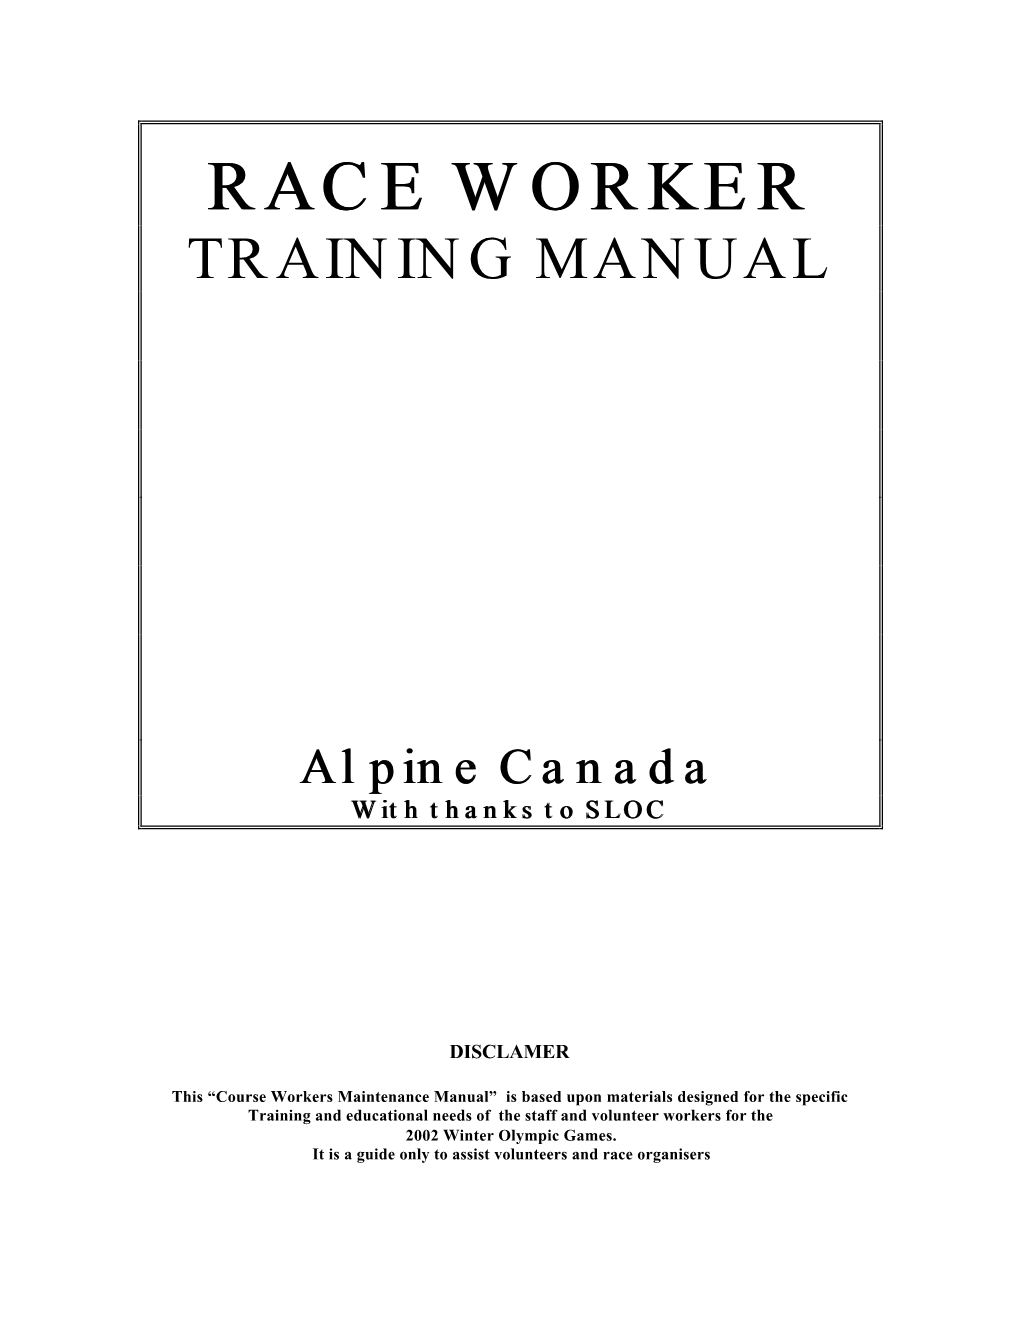 Race Worker Training Manual